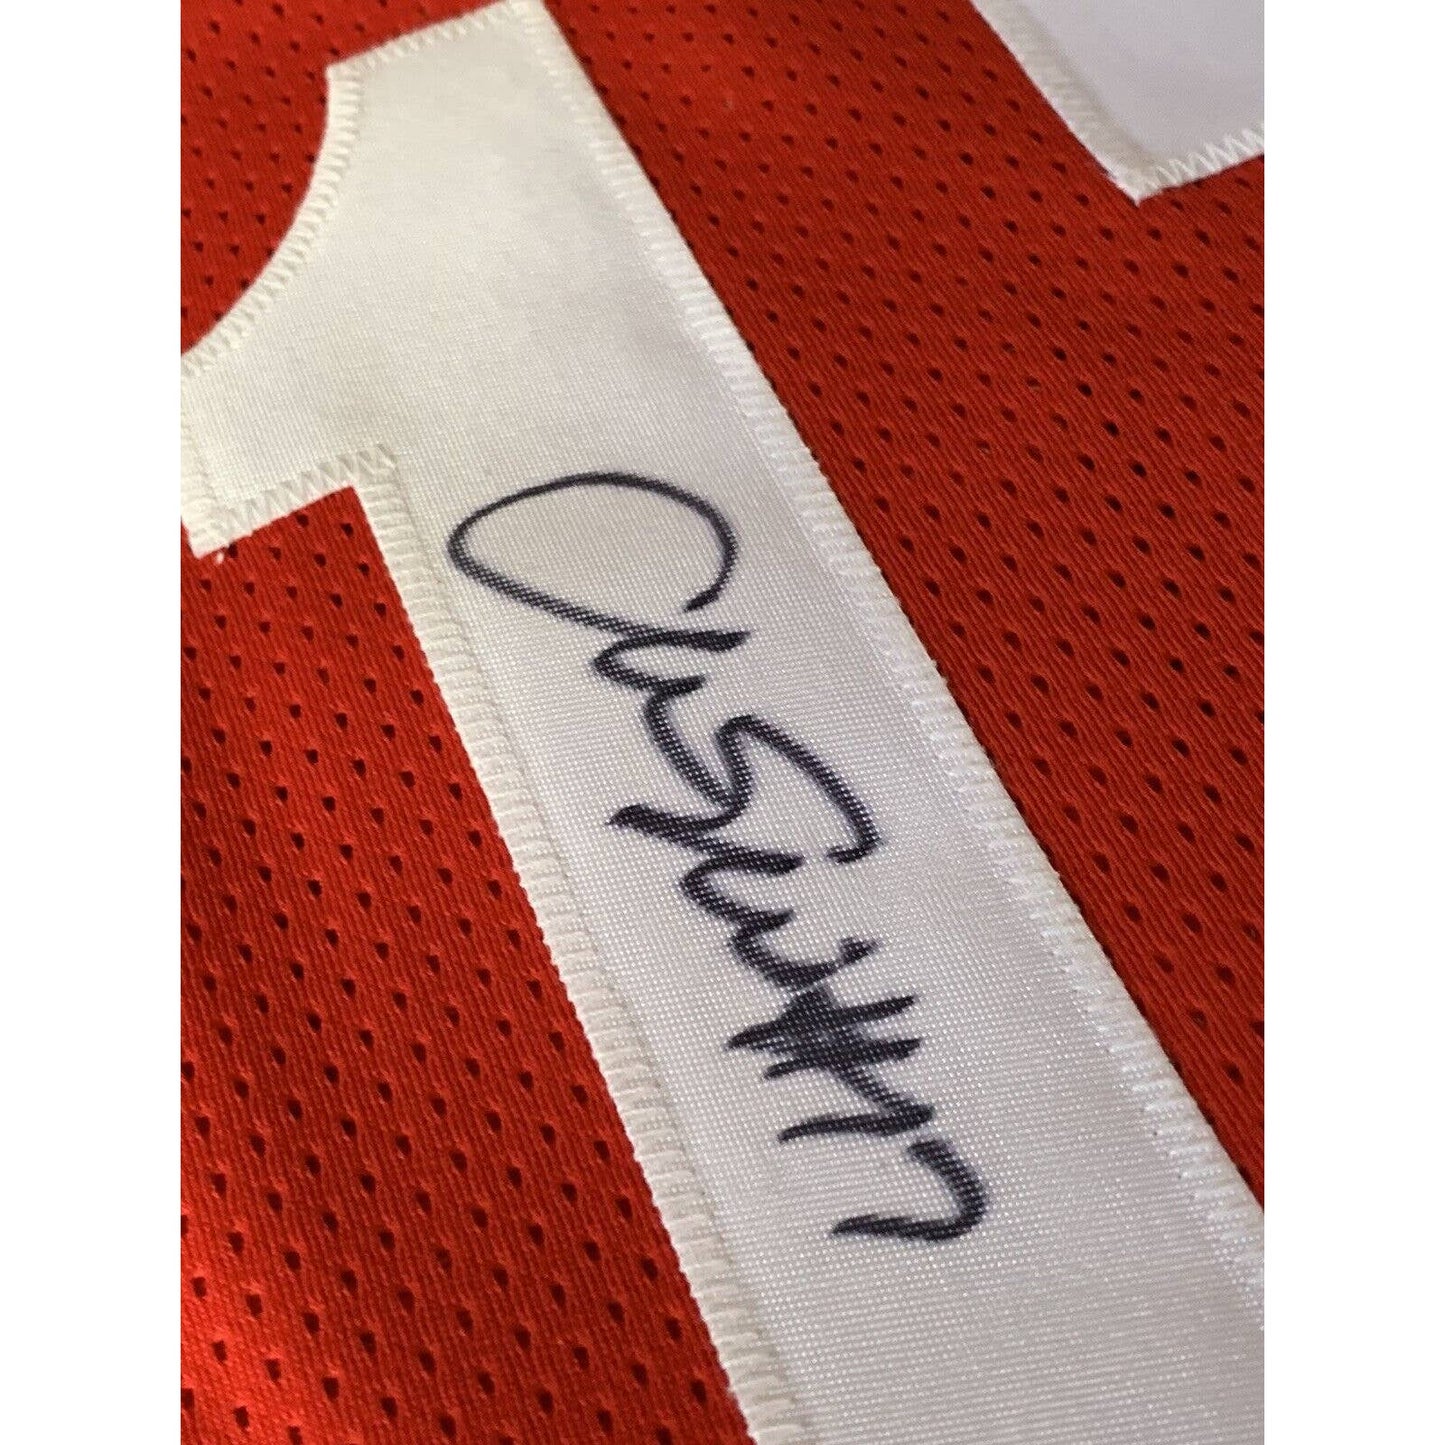 Mario Elie Autographed/Signed Jersey TRISTAR Houston Rockets - TreasuresEvolved